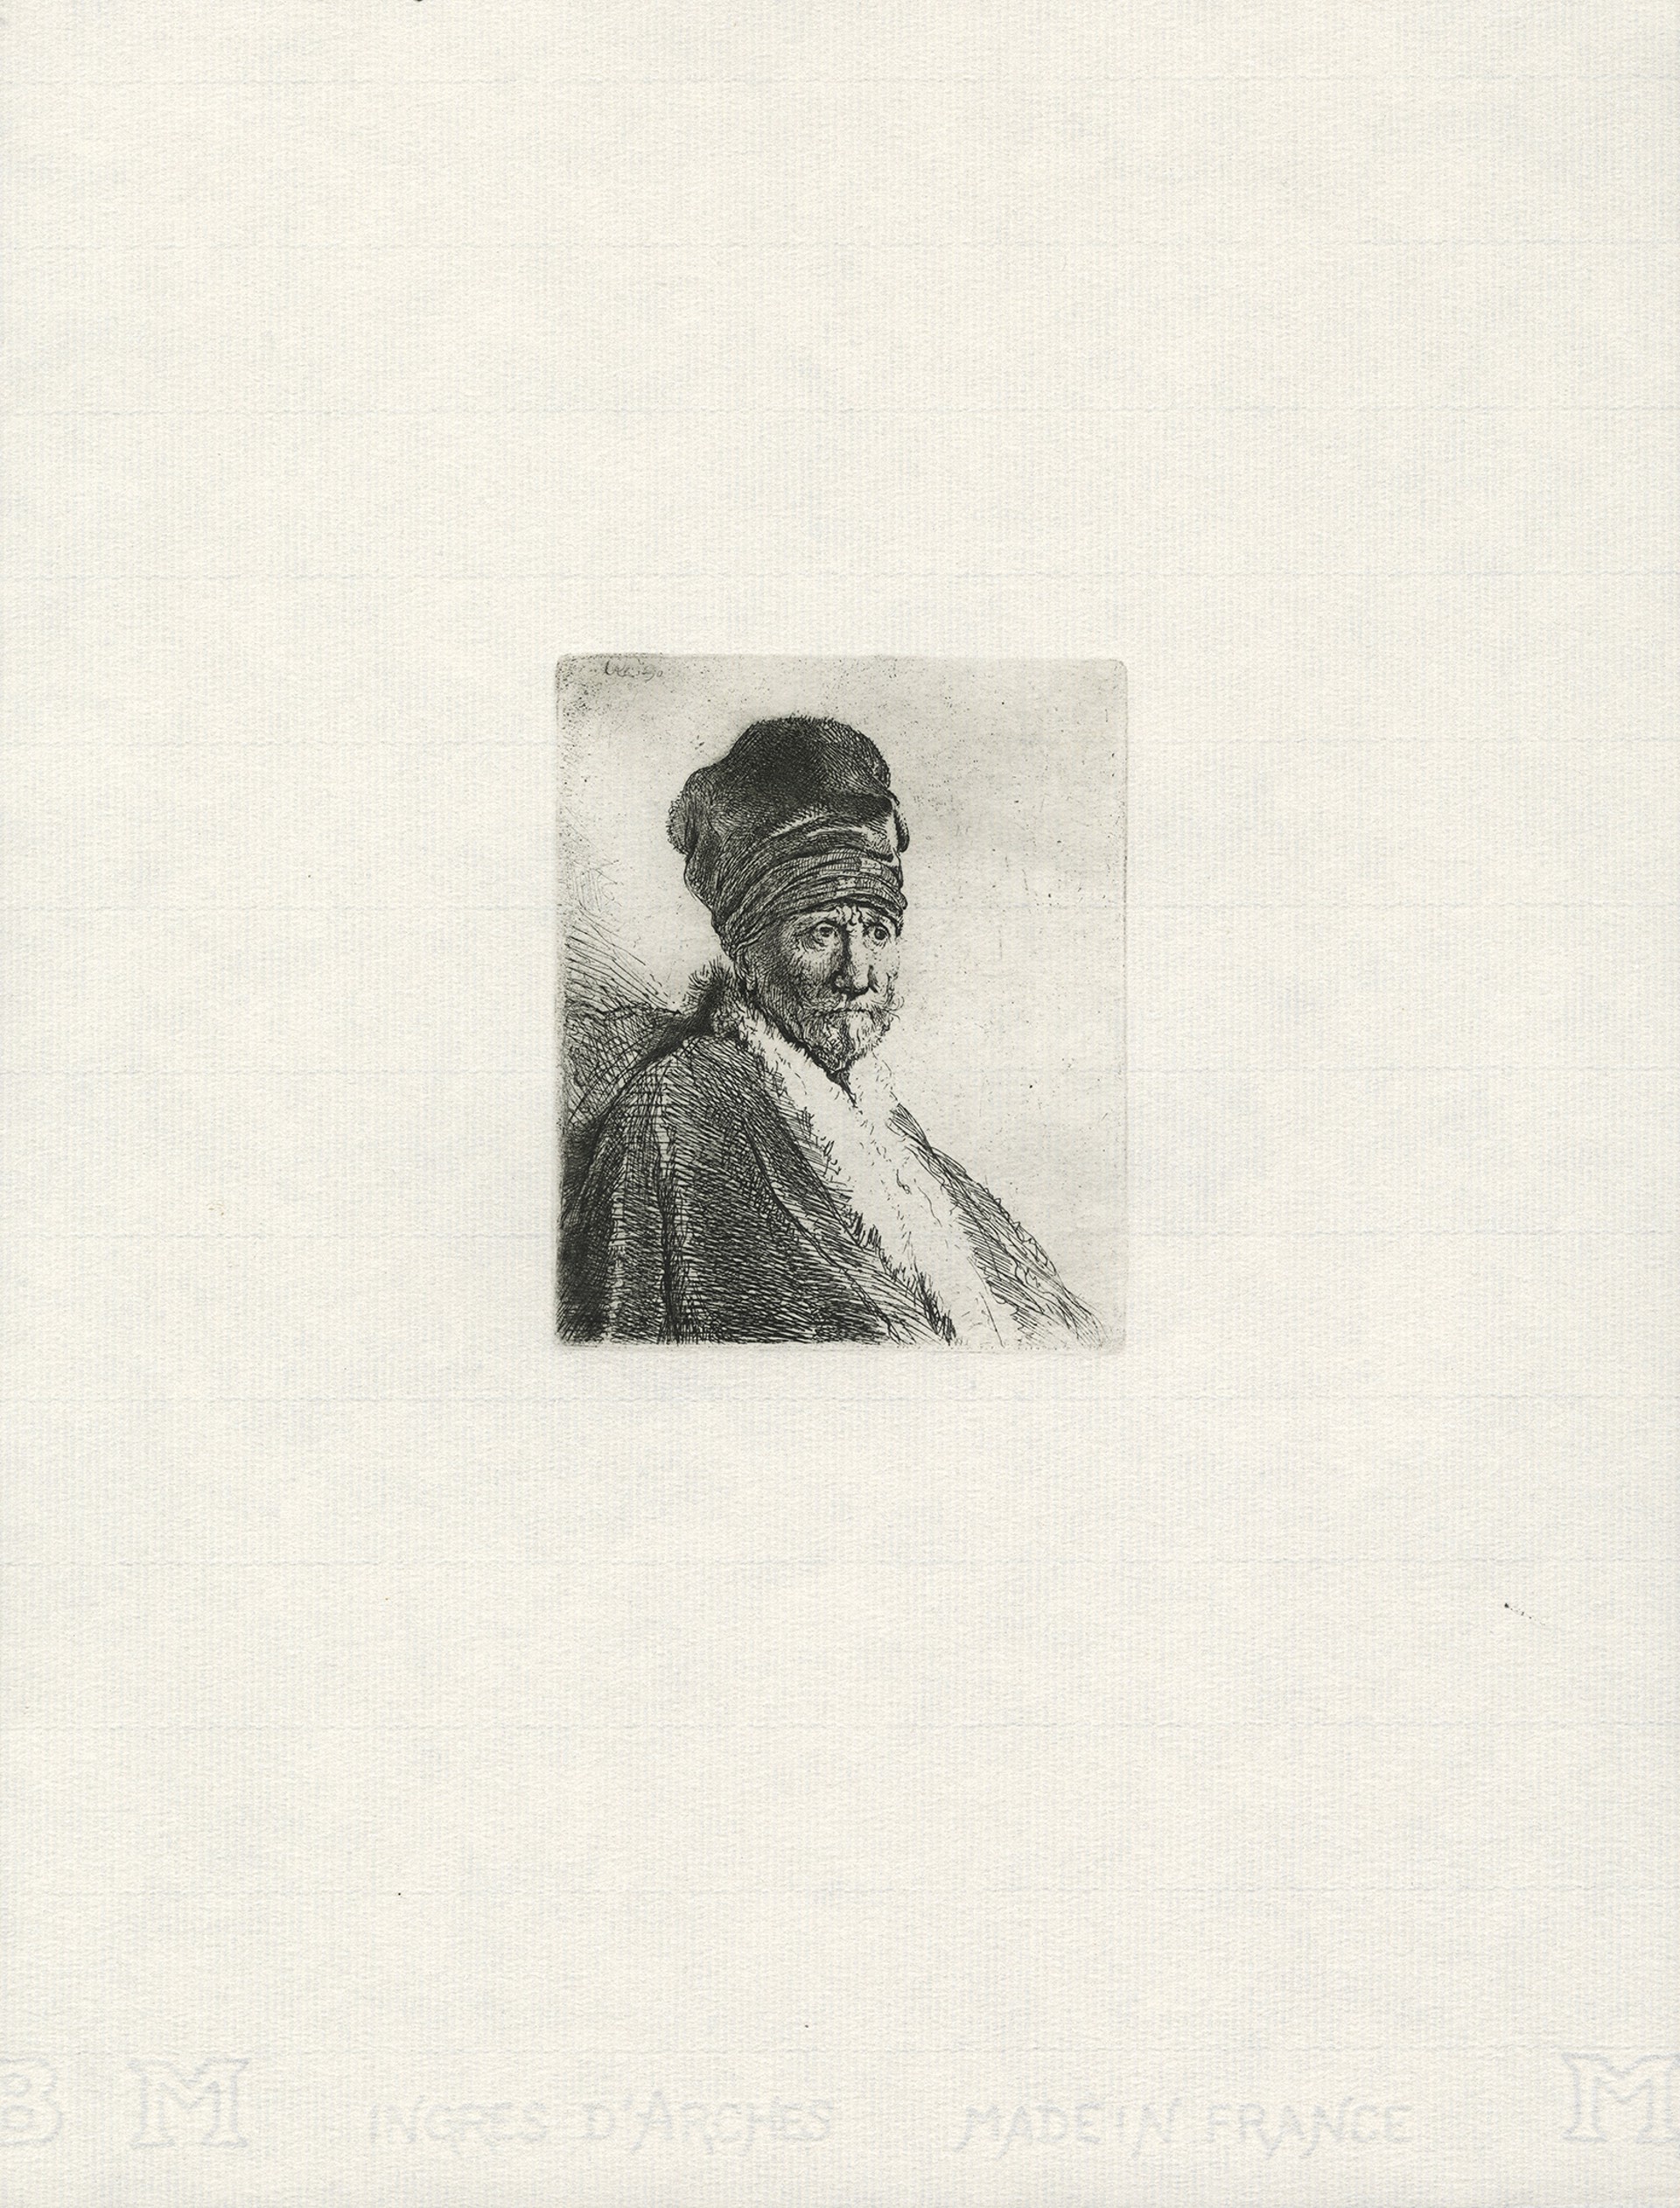 Bust of a Man Wearing a High Cap by Rembrandt van Rijn